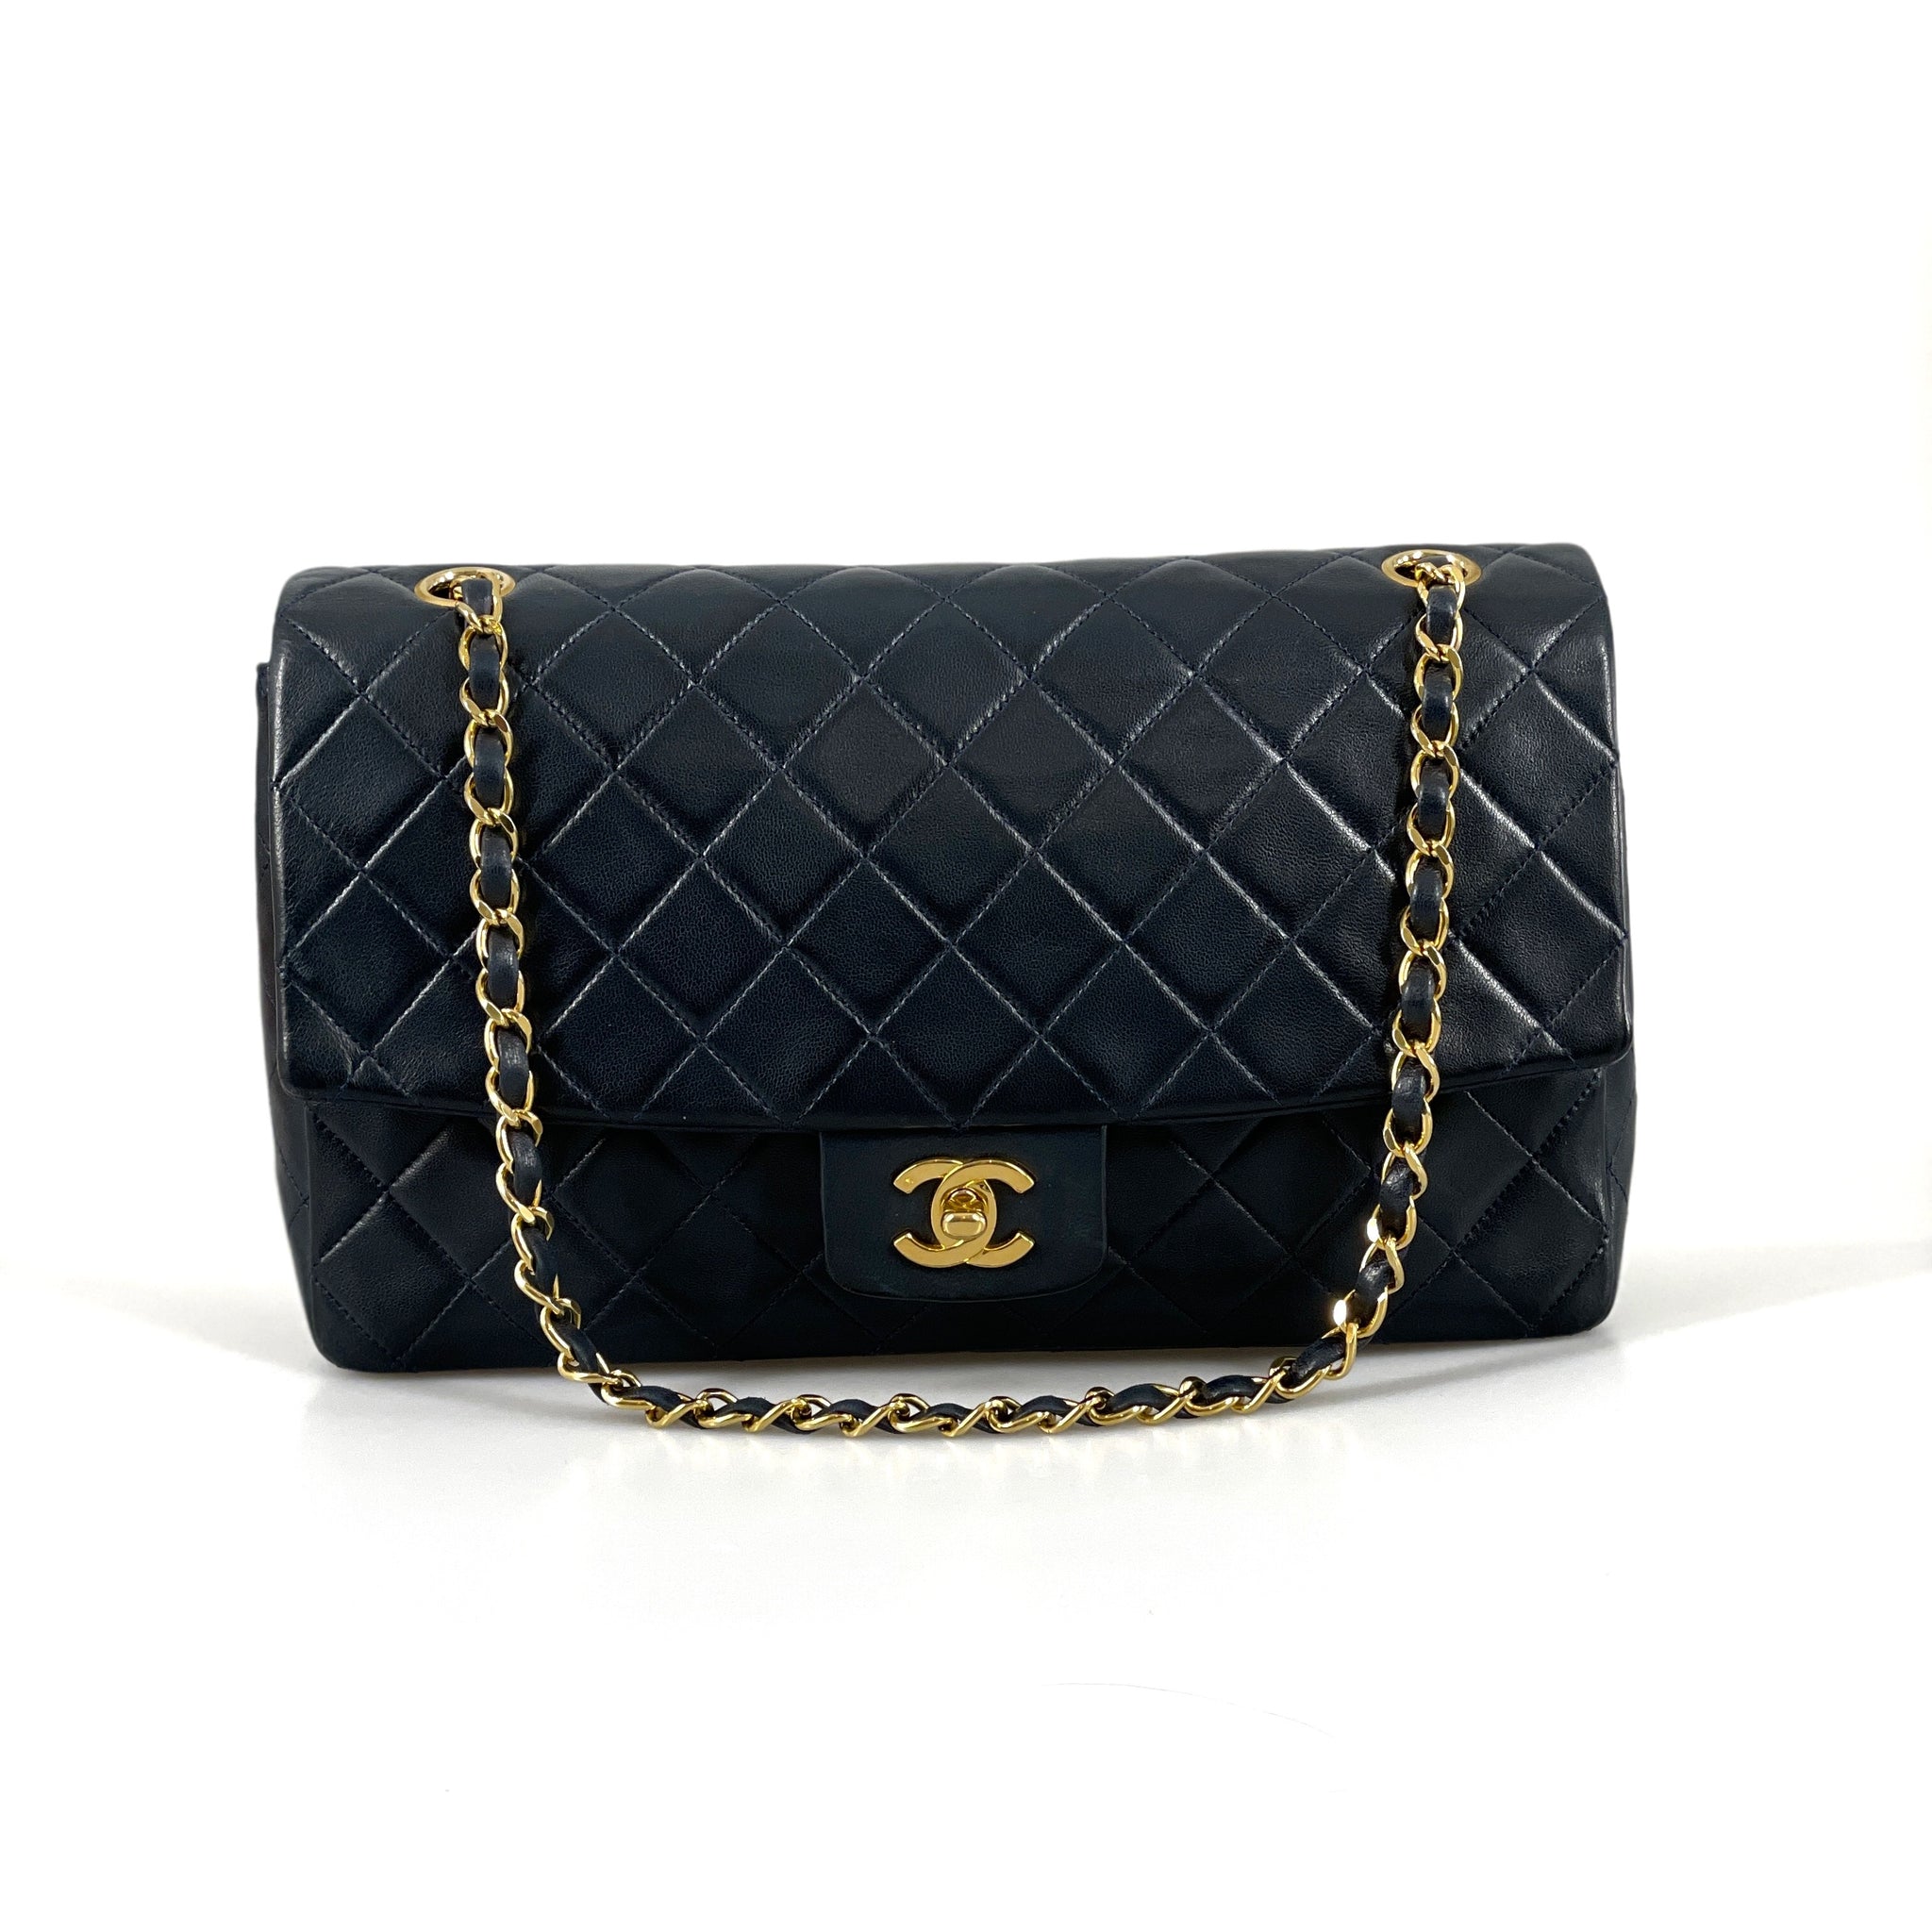 Chanel single flap mörkblå 90-tal SV8282